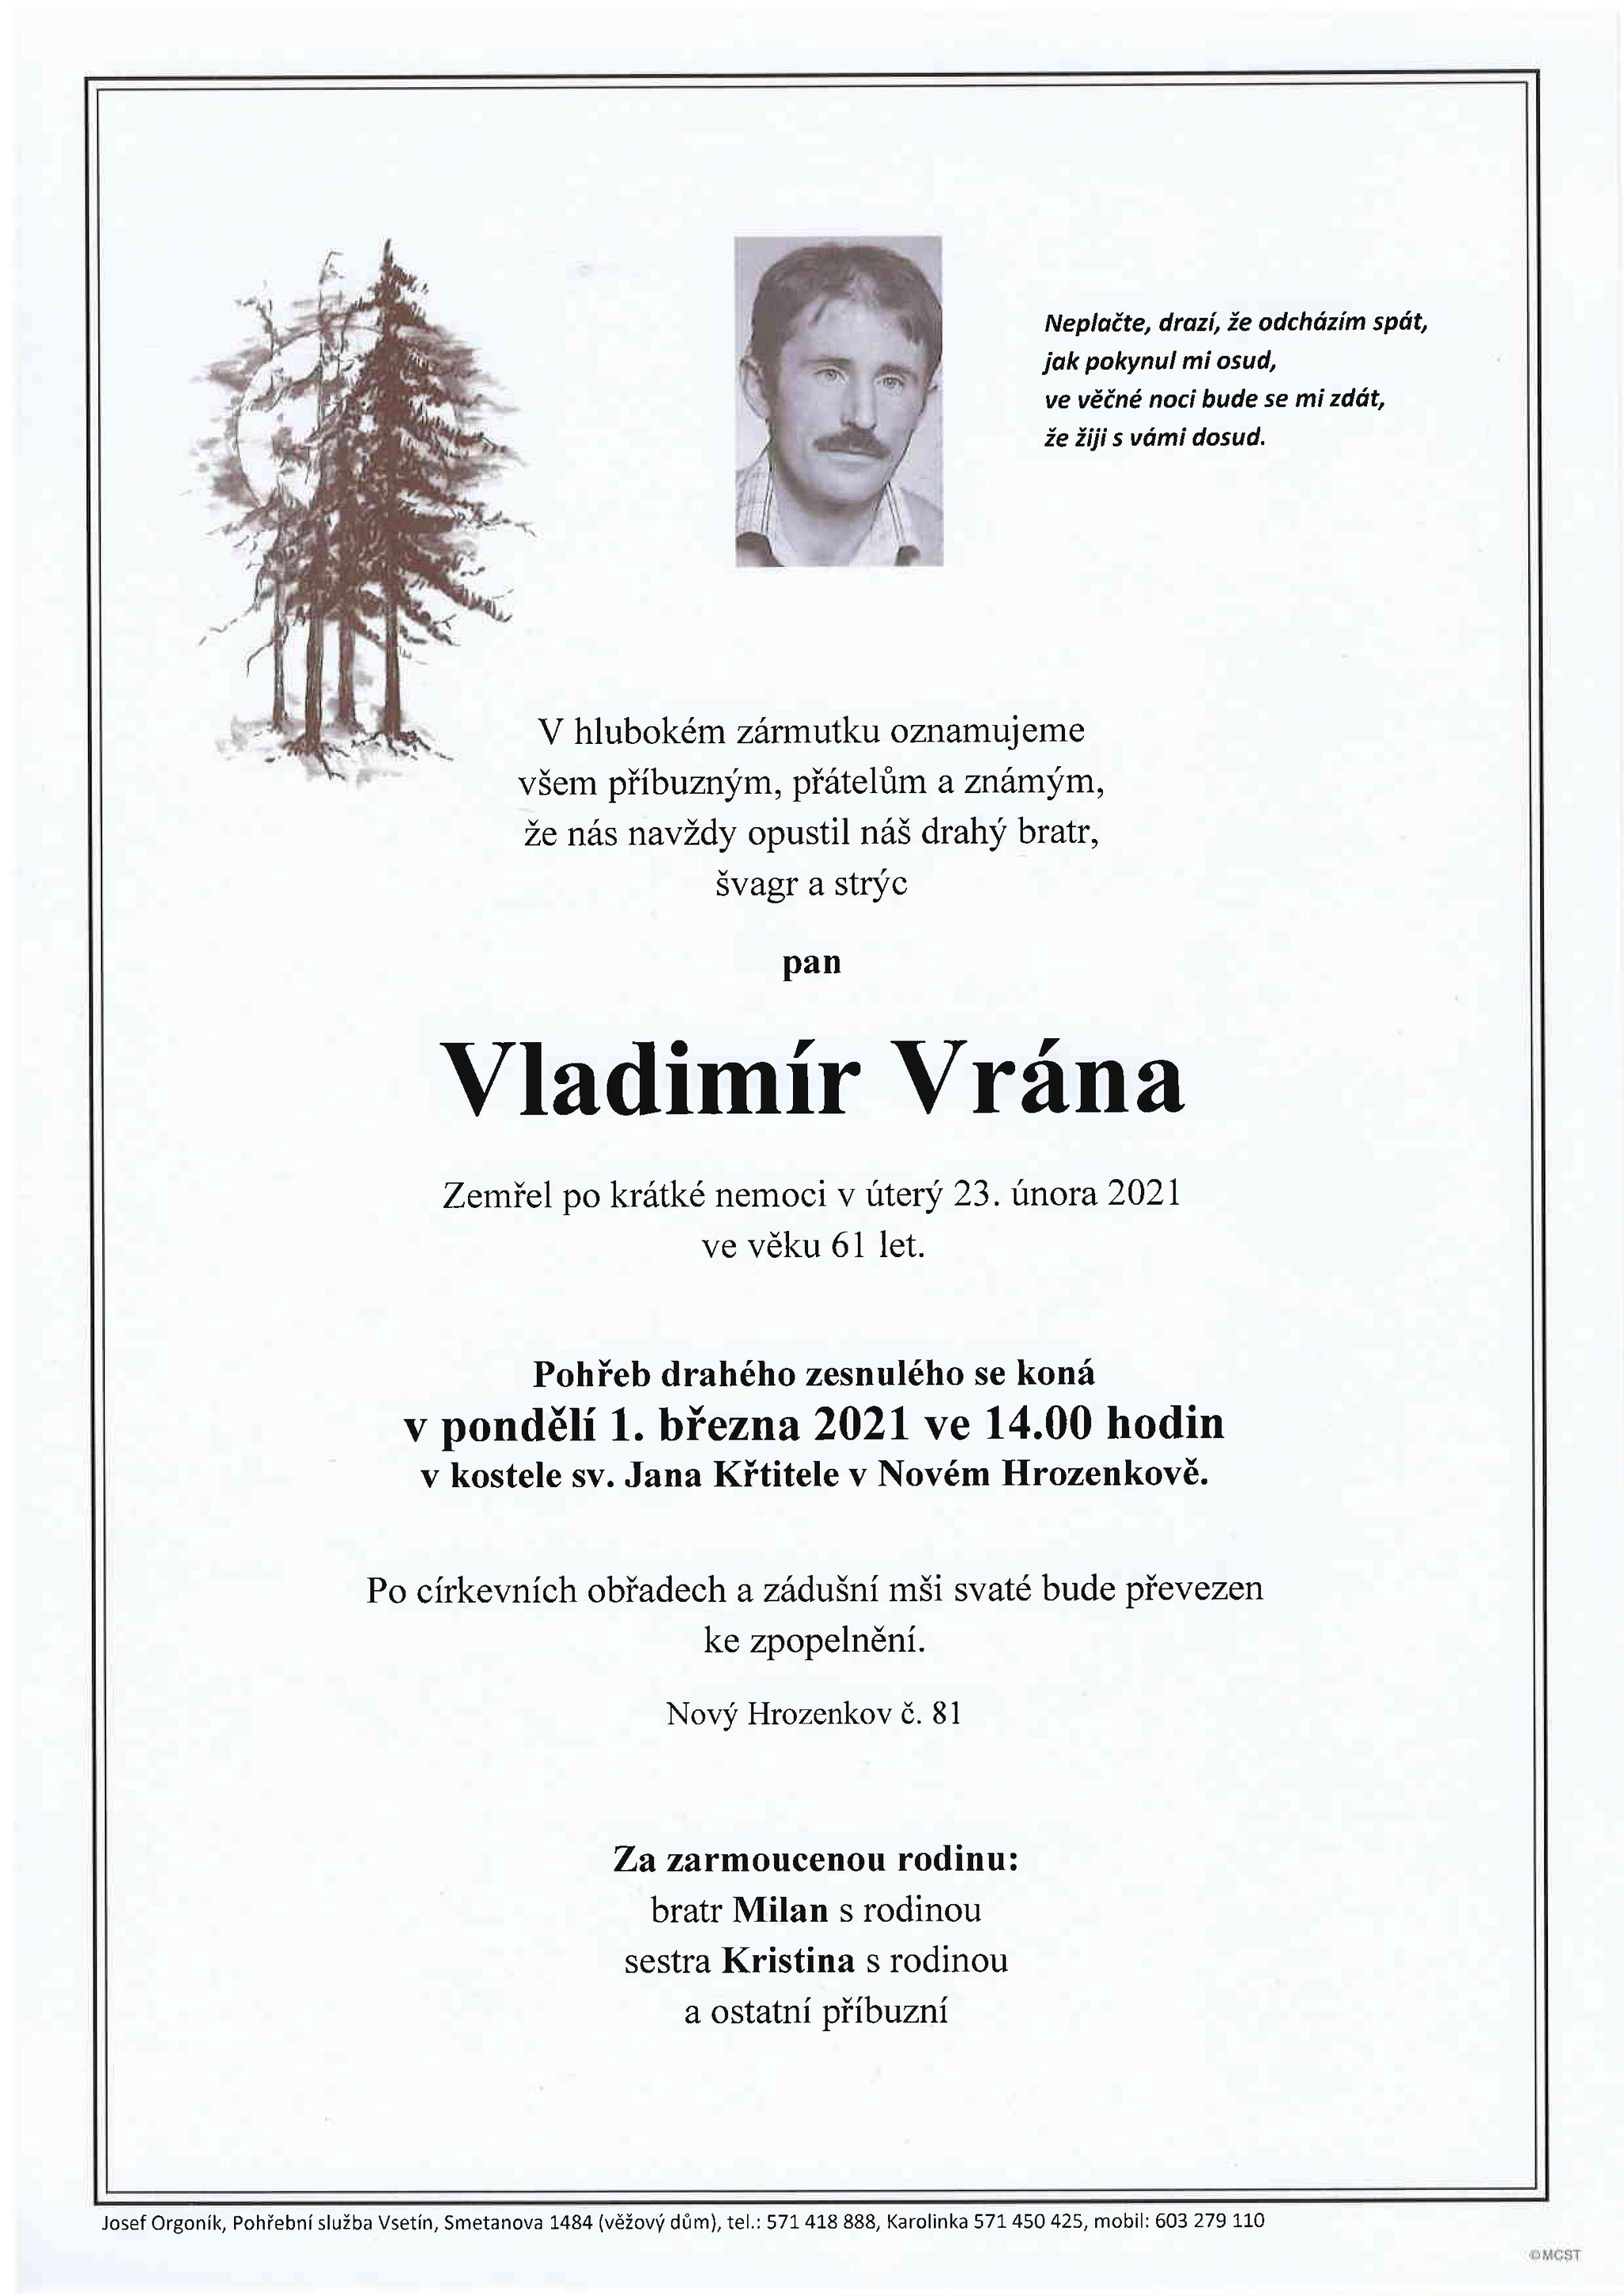 Vladimír Vrána